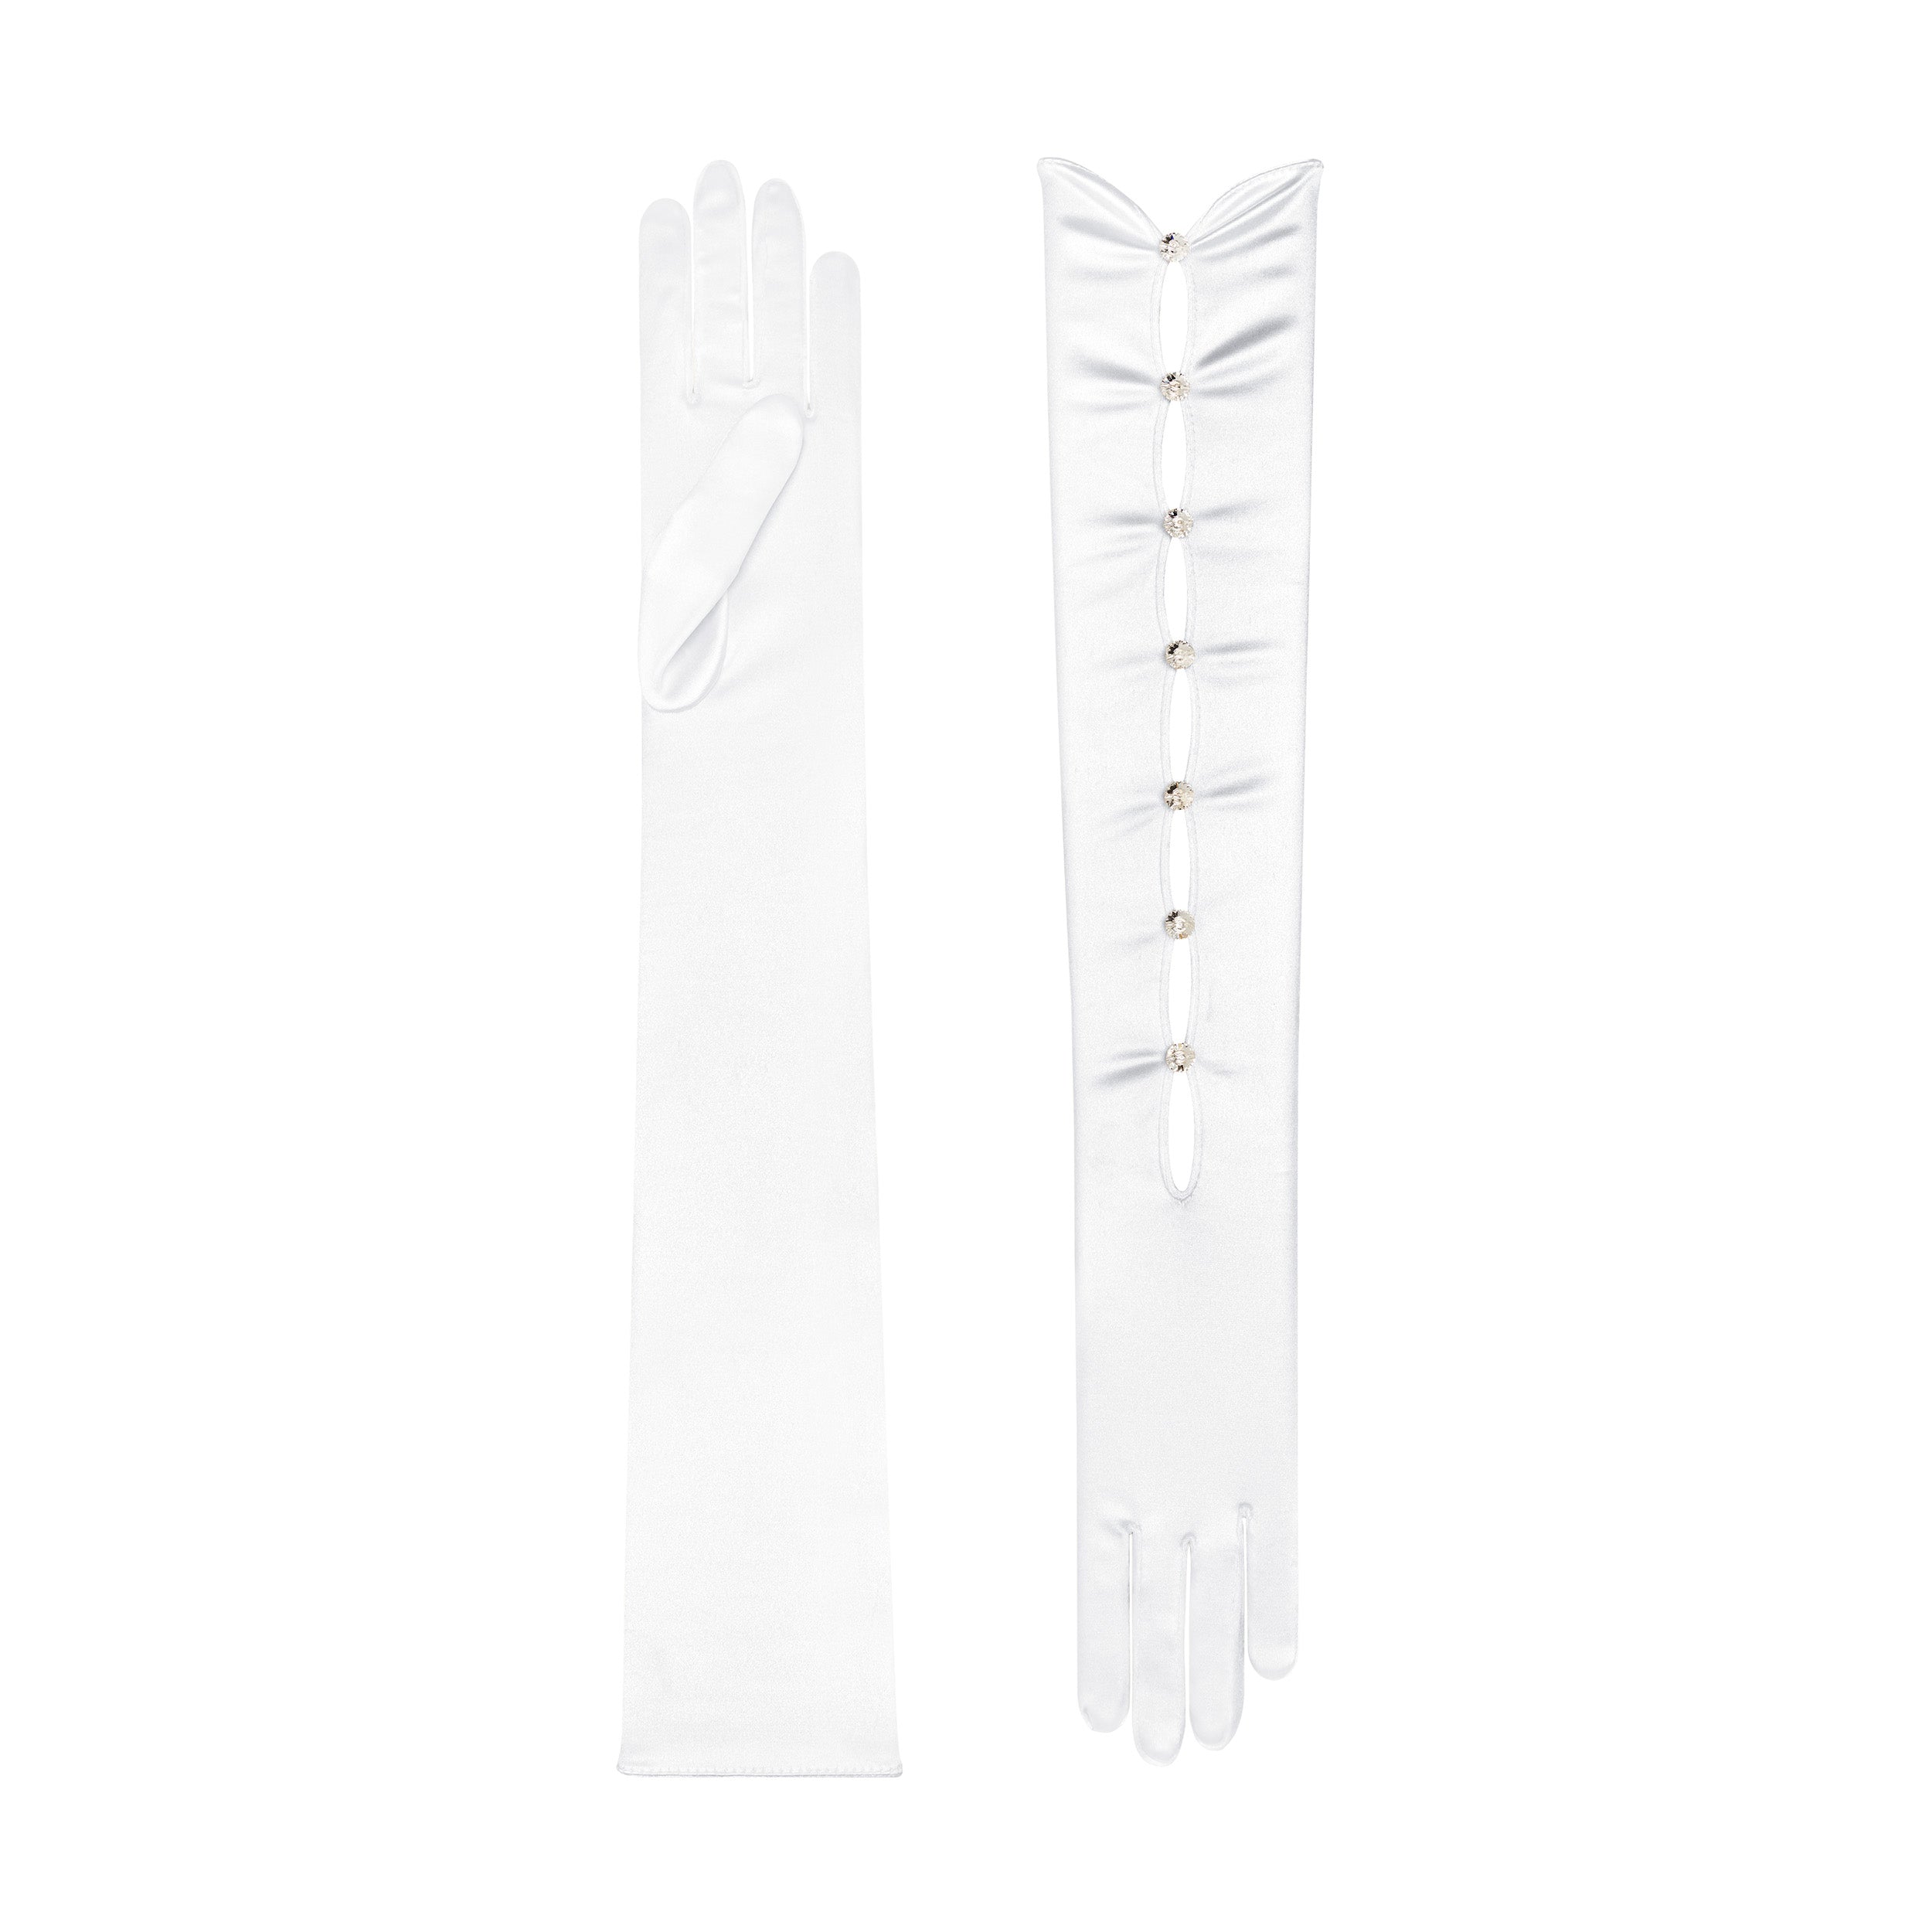 Cornelia James - White Satin Opera Gloves - Calypso - Size (8½) - Made to Measure Evening Gloves by Cornelia James